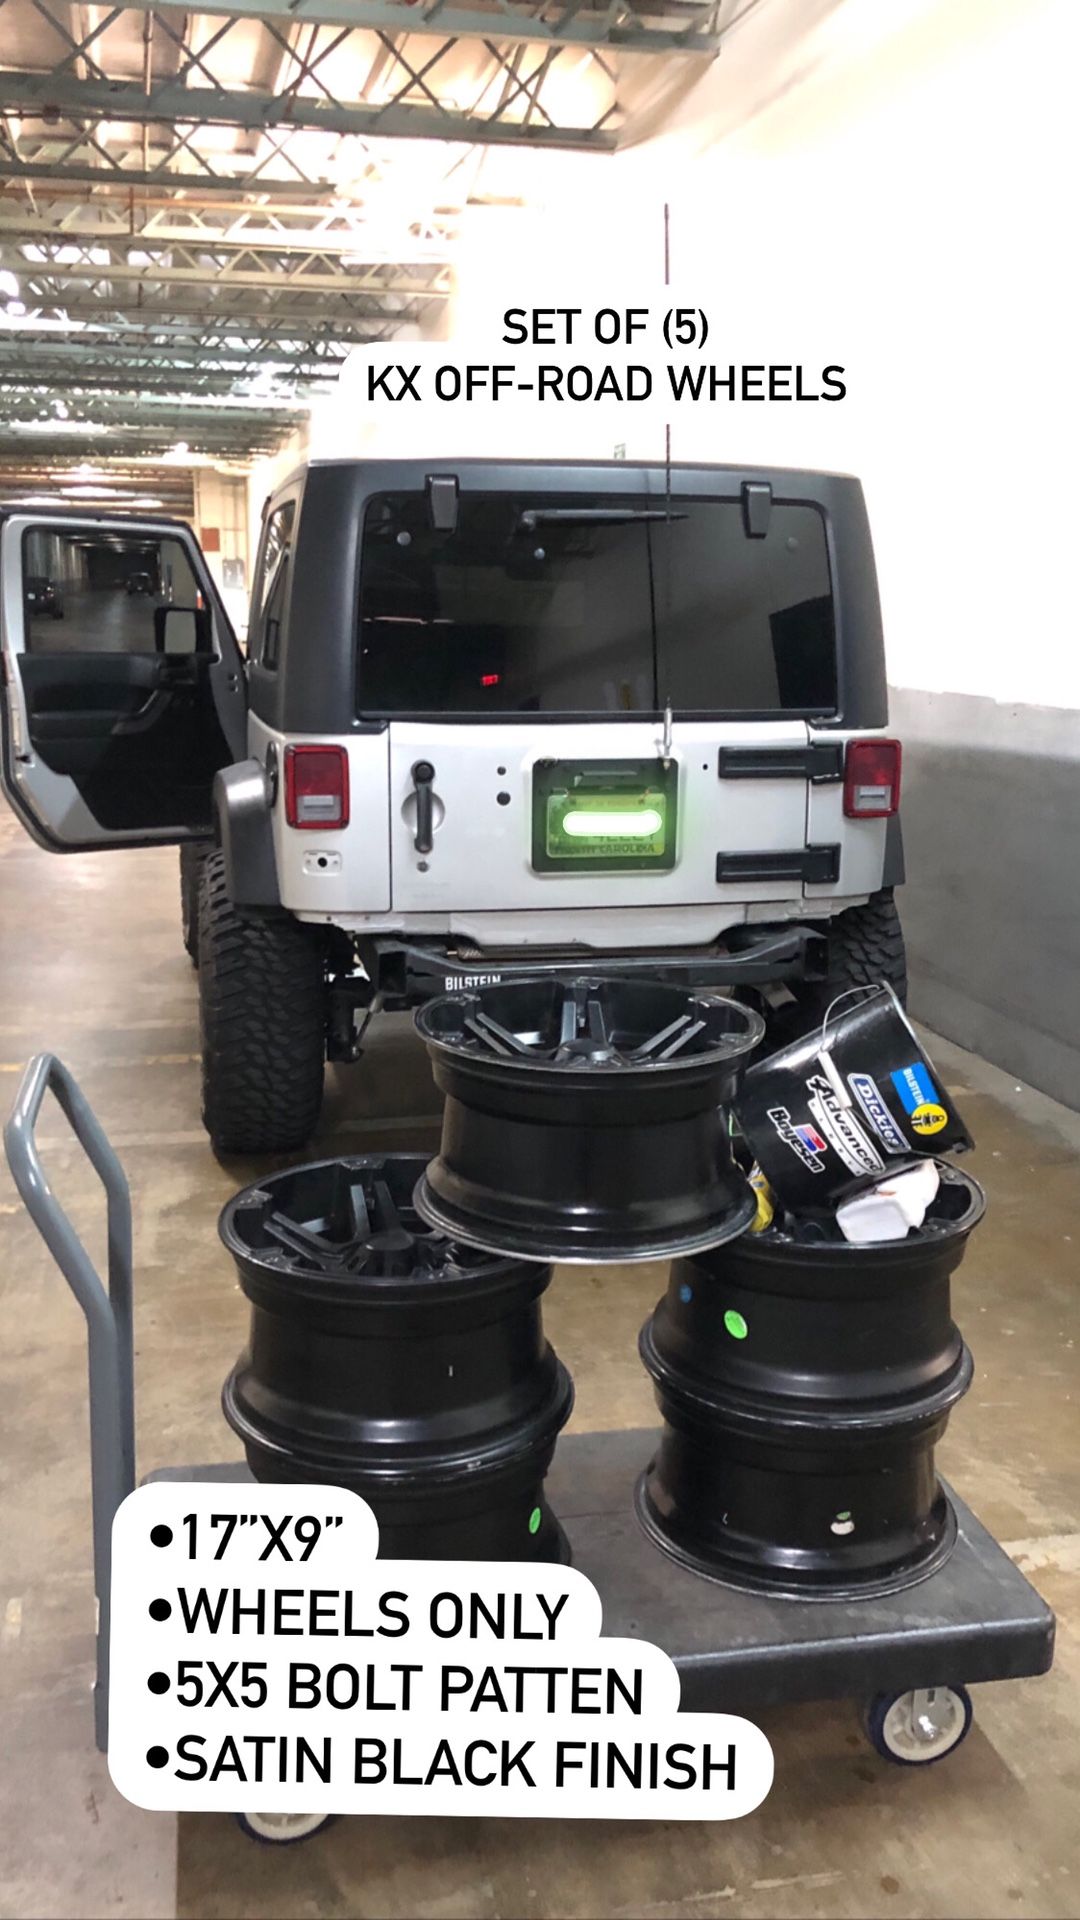 -12 Offset Jeep Wrangler Wheels (5 Wheels no tires)